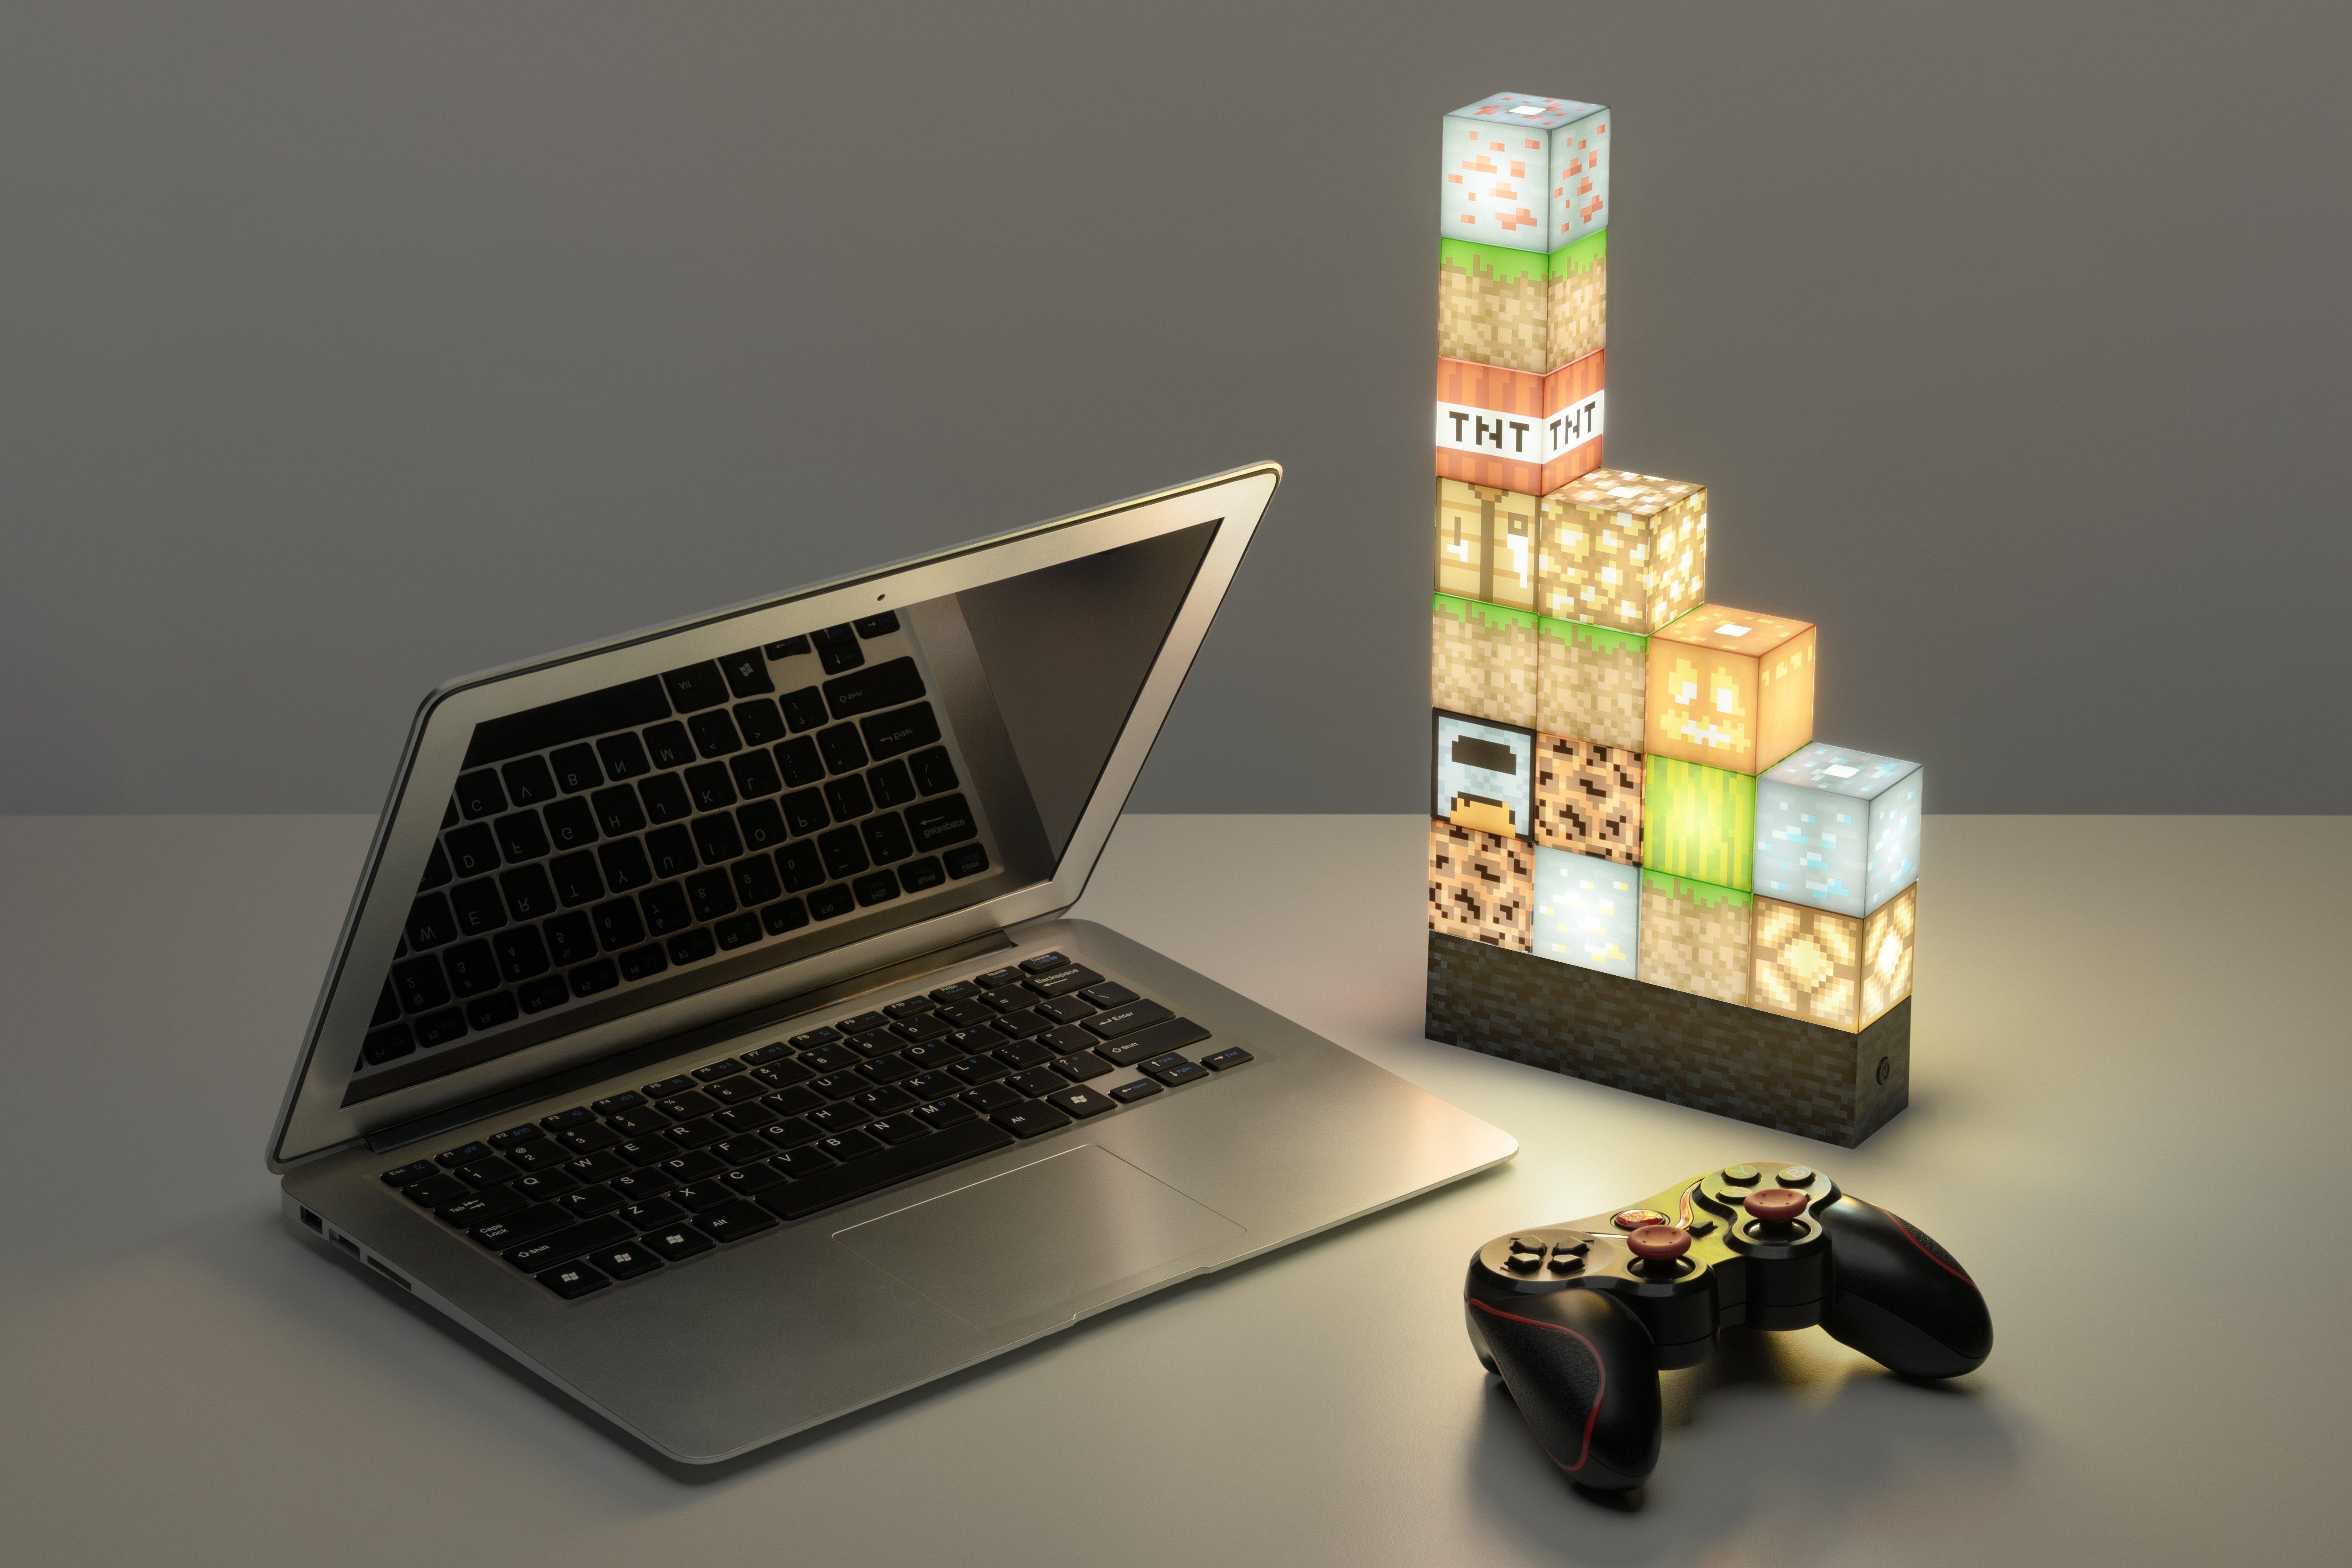 Paladone Minecraft Block Building Light